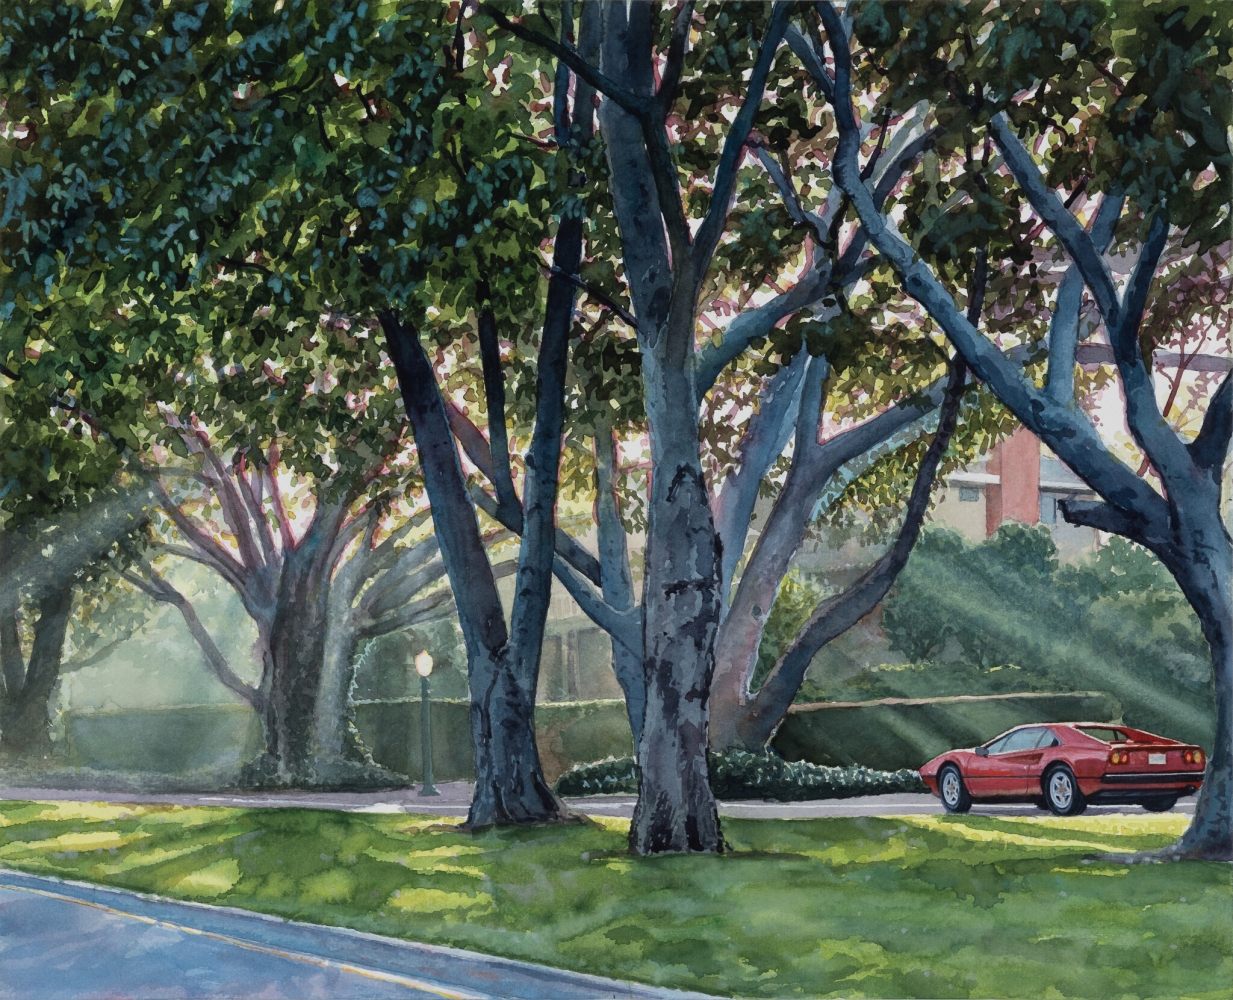 Tim Gardner

Ferrari, Morning Light

2021

Watercolor on paper

13 x 16 inches (33 x 40.6 cm)

TG 606

INQUIRE